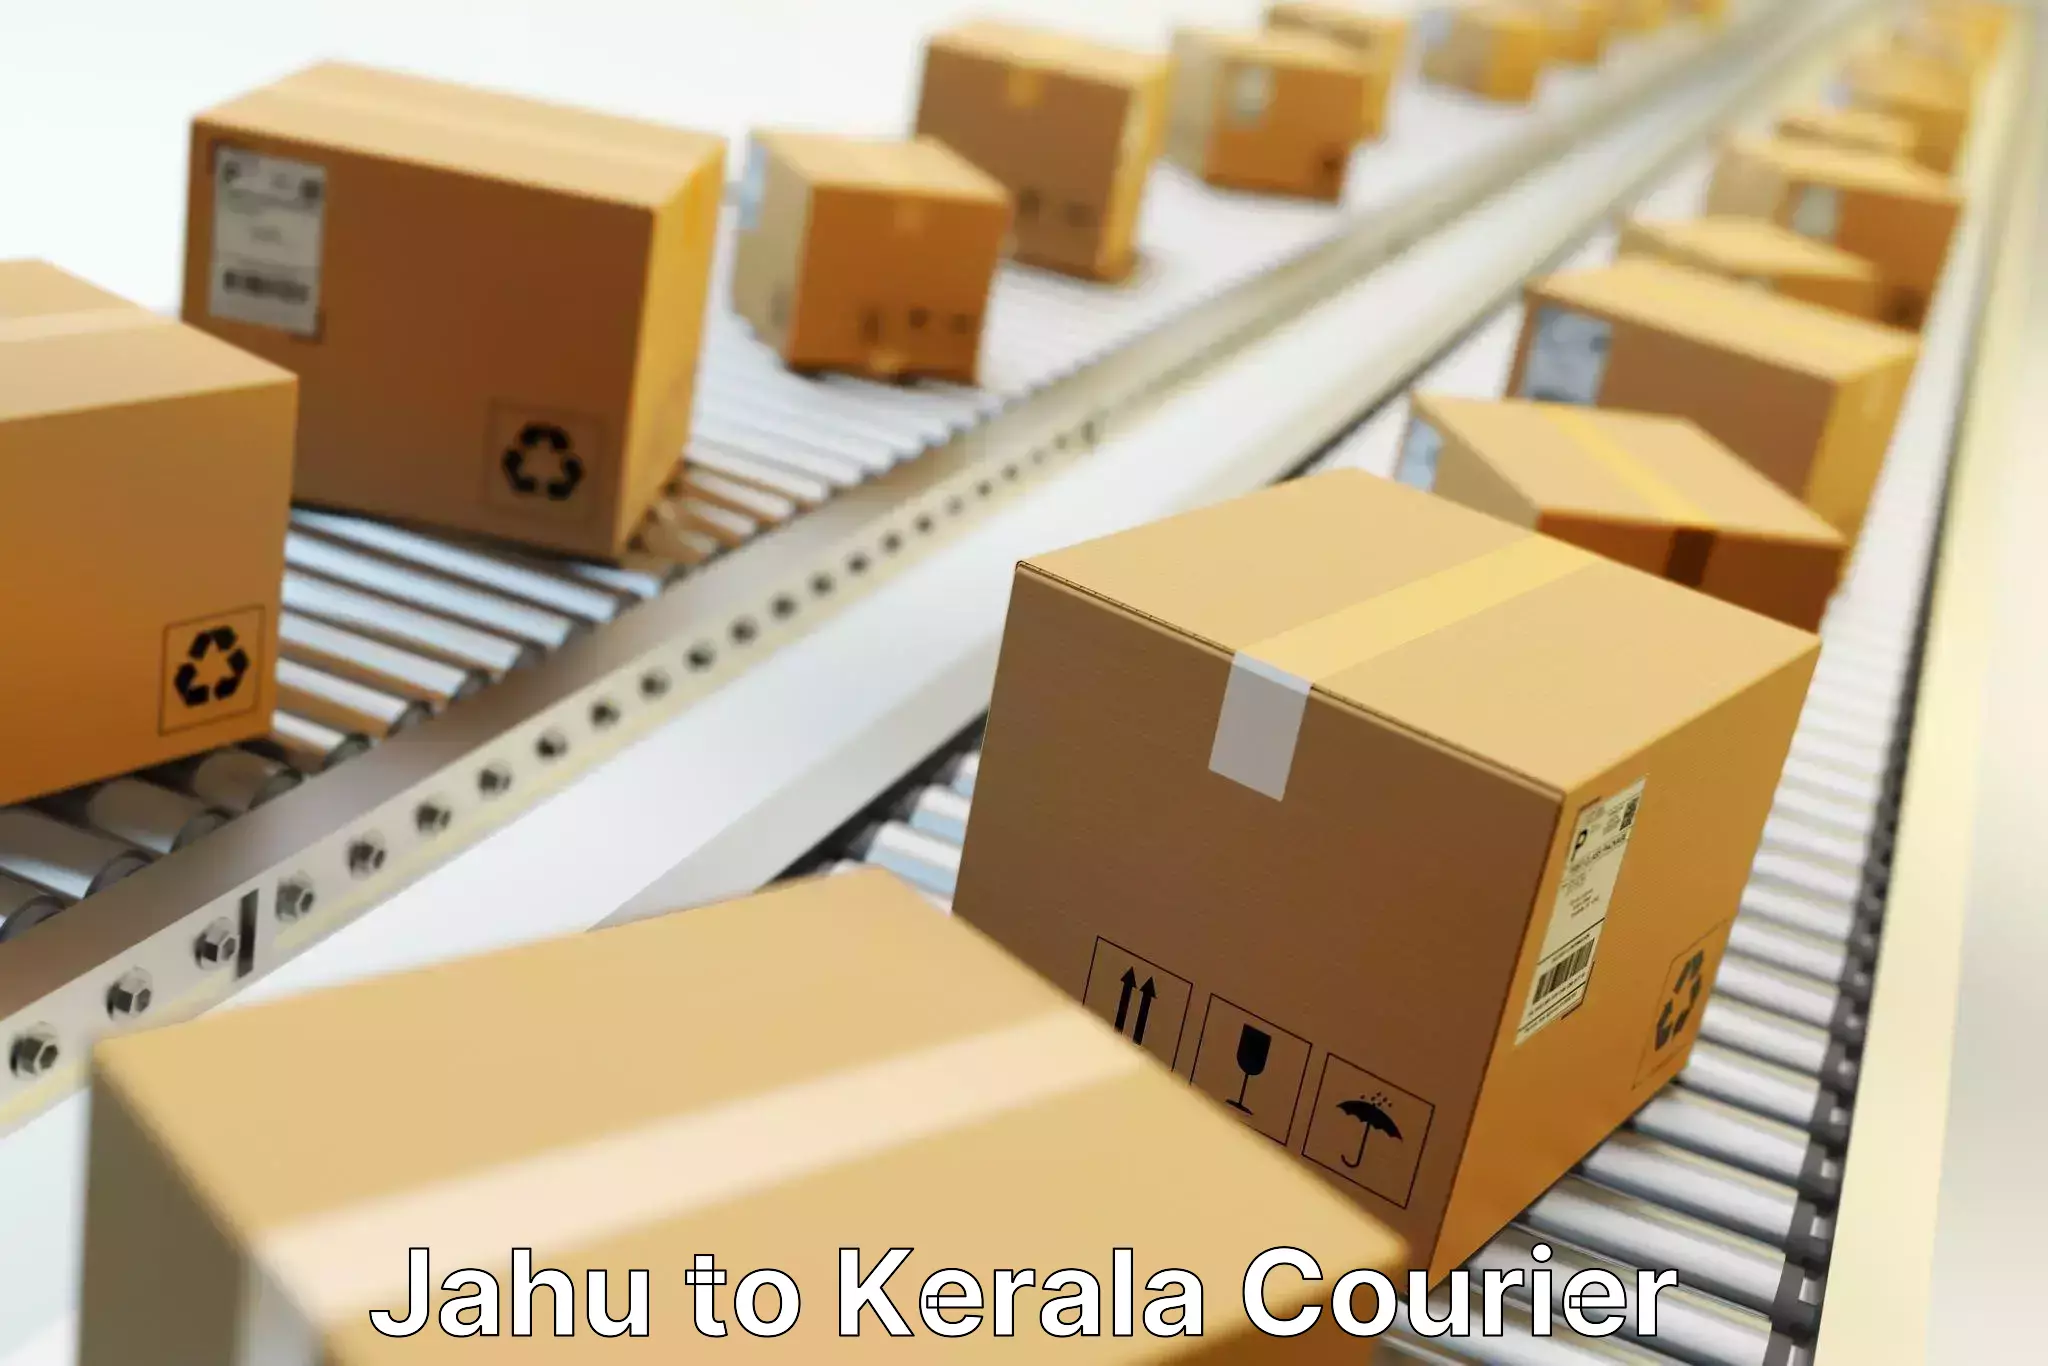 Global shipping solutions Jahu to Kerala